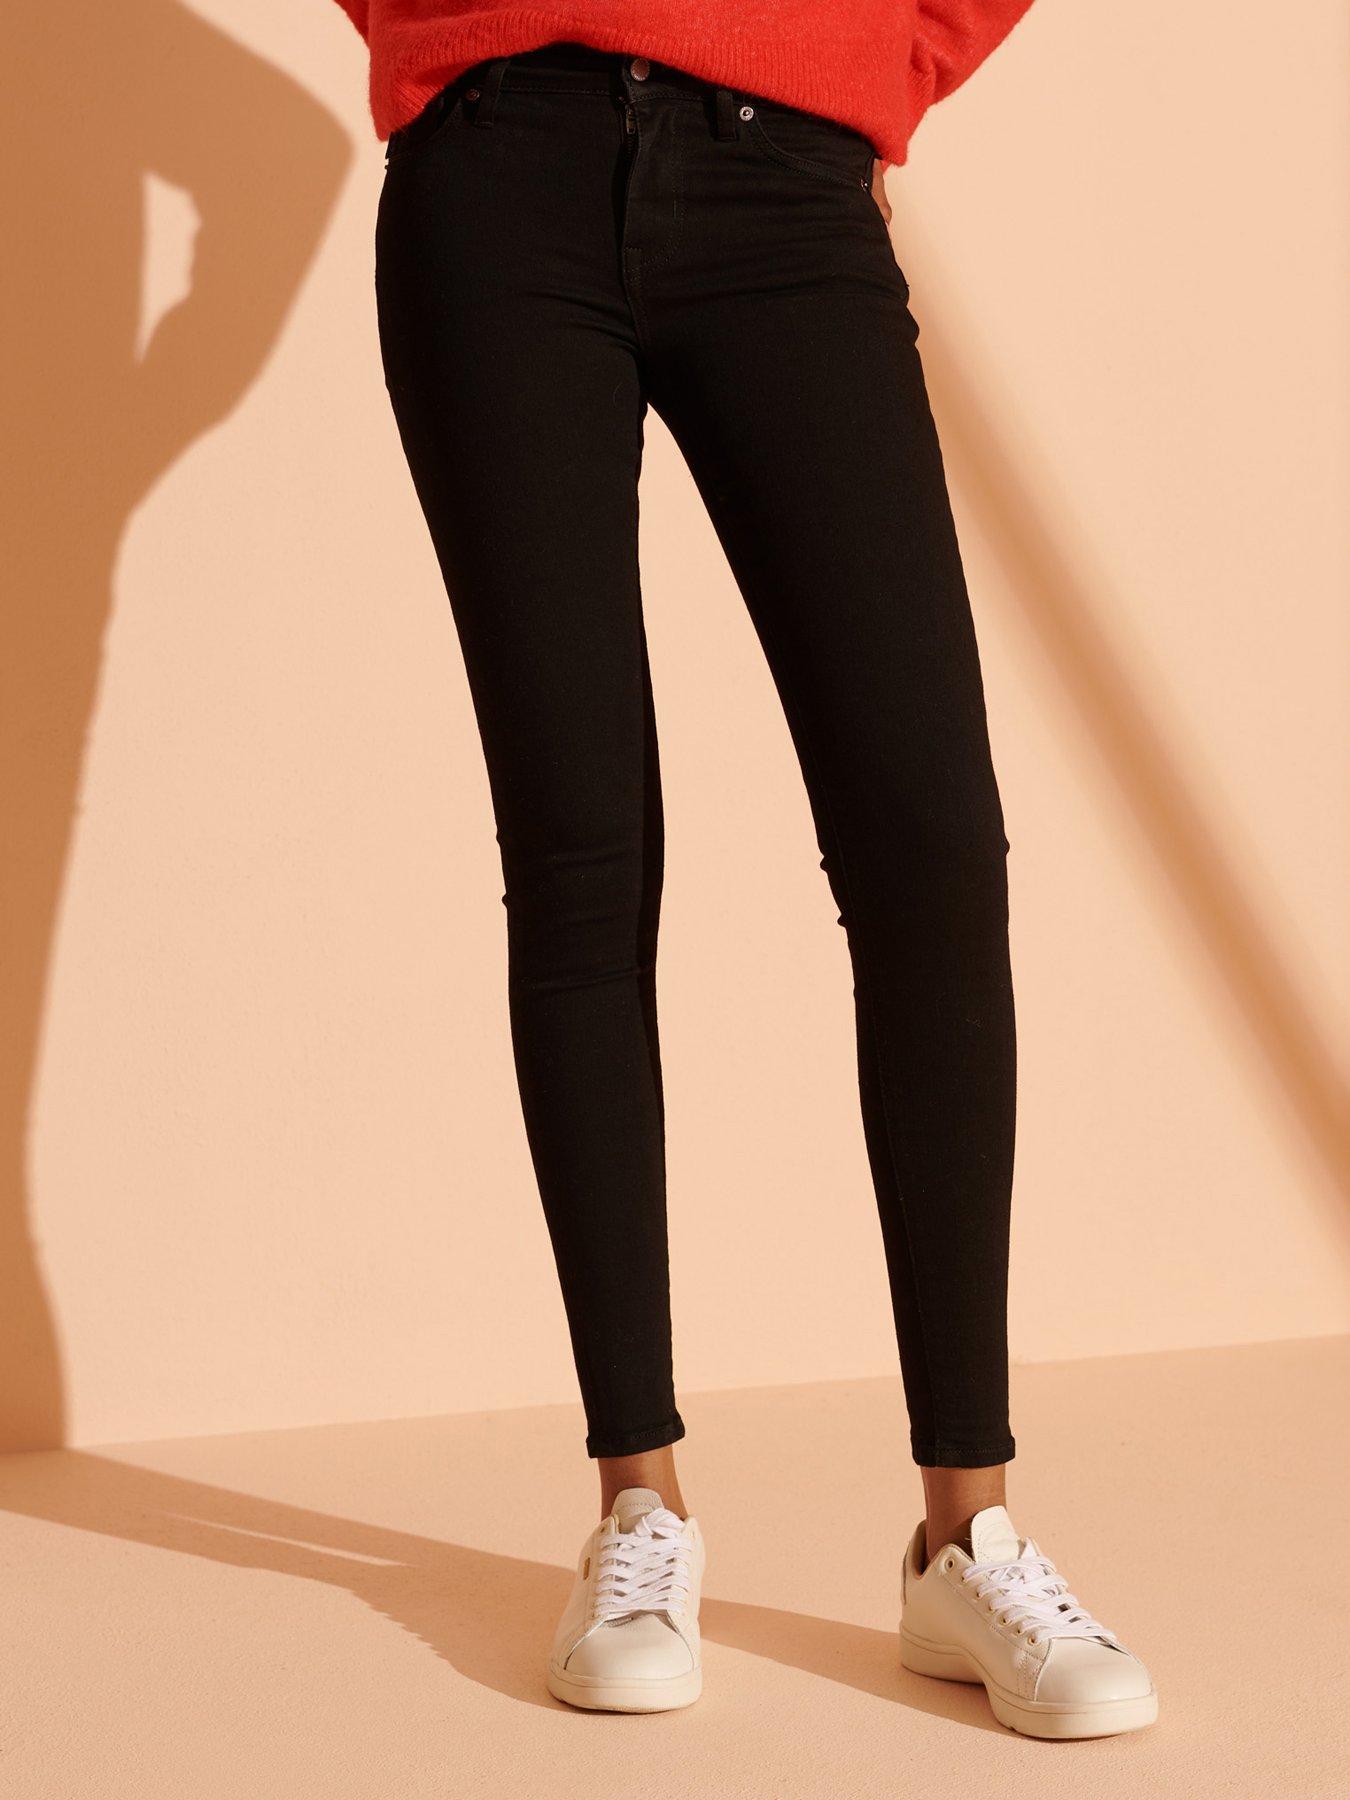 best black skinny jeans womens uk